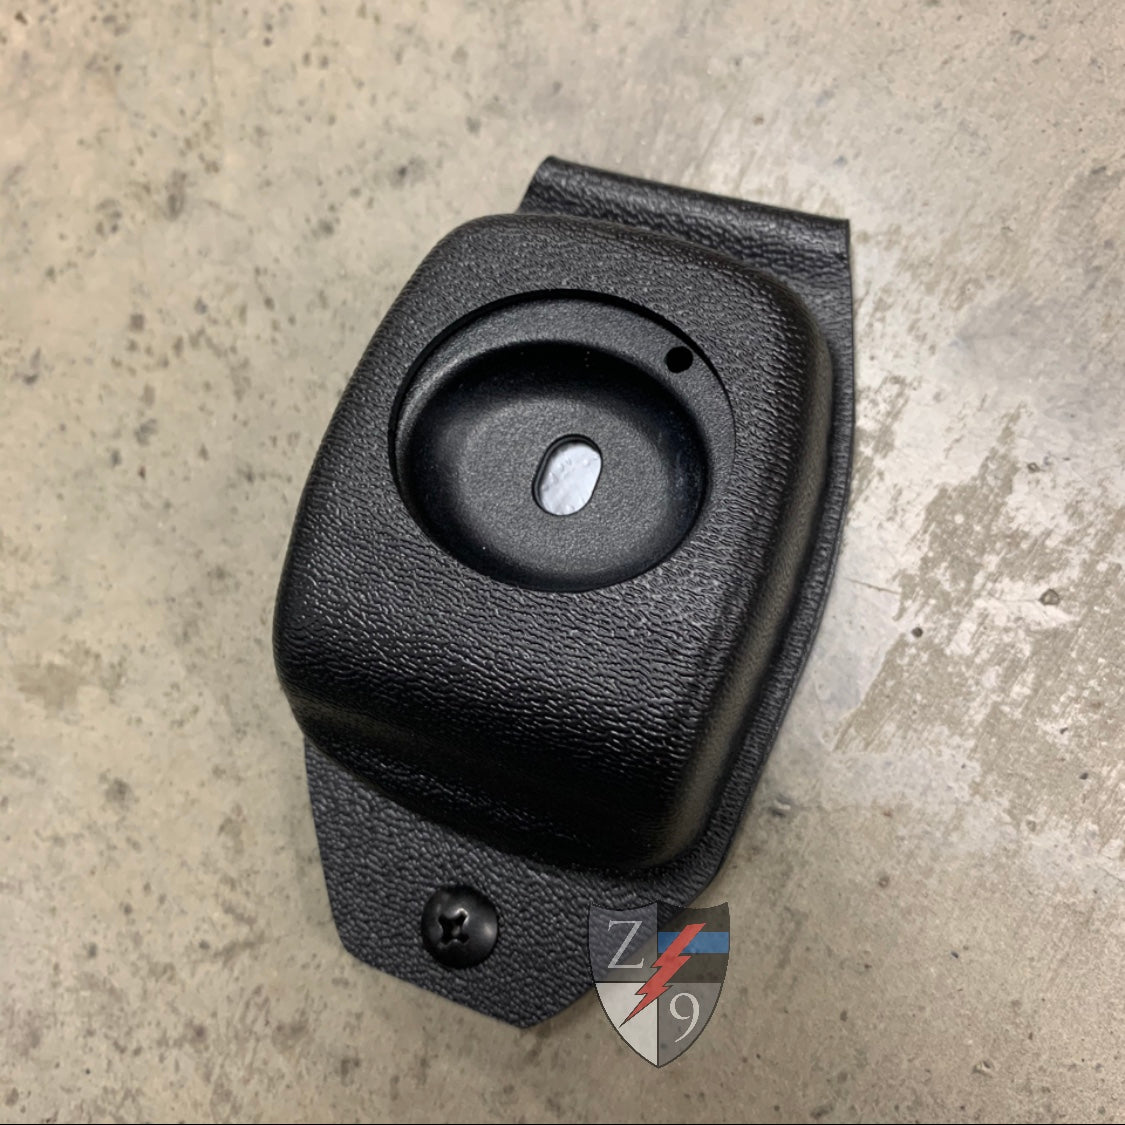 New Ace K9 1 Button Remote Case